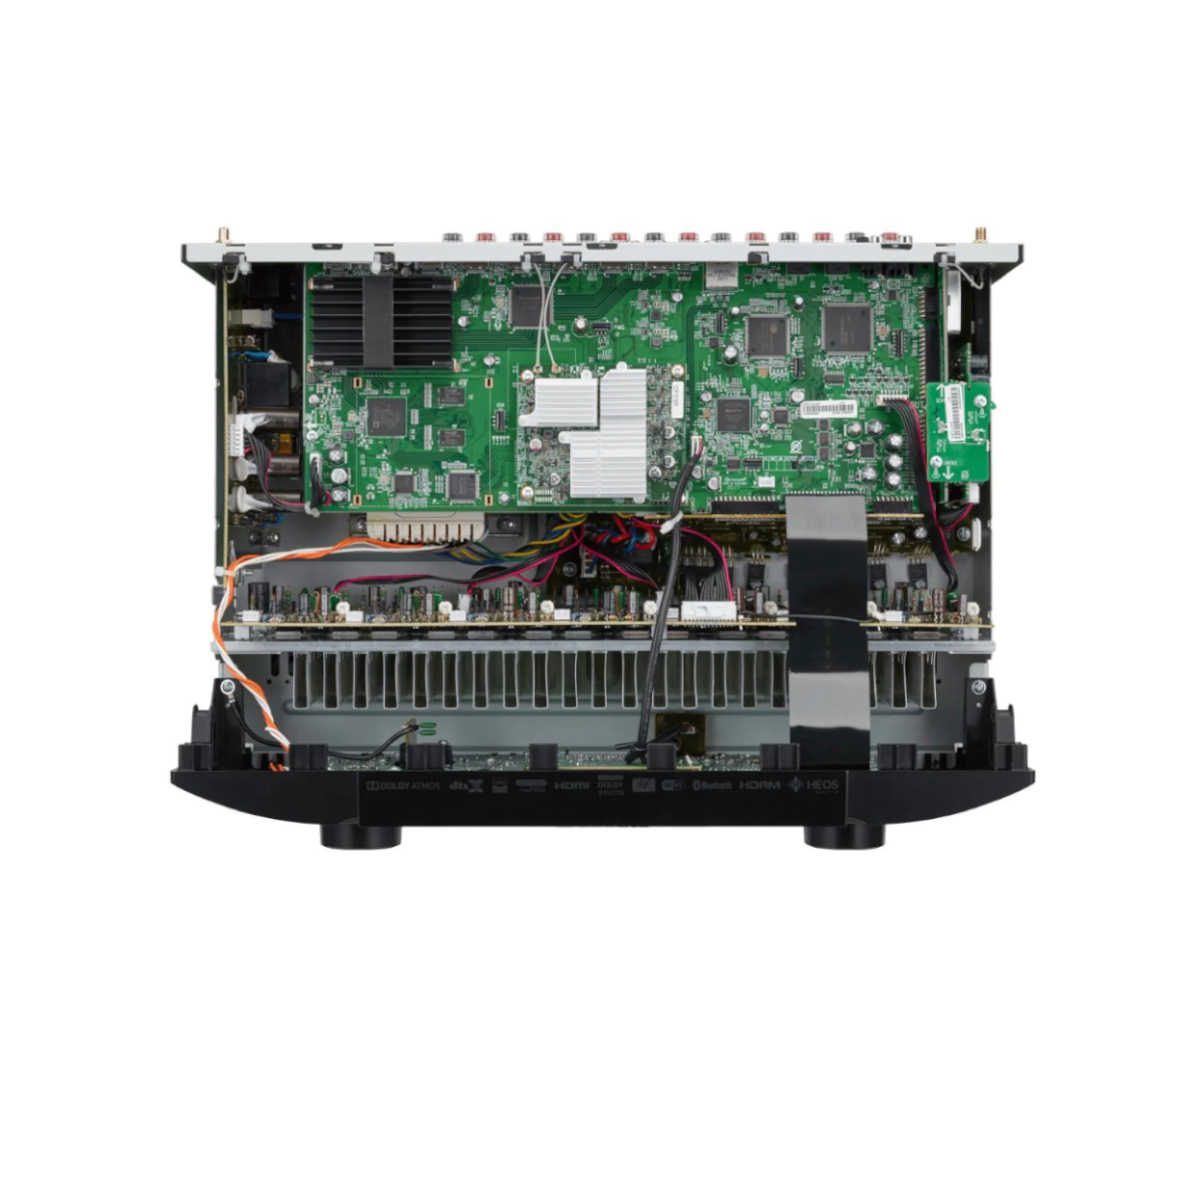 Marantz SR5015 7.2 Ch 8K AV Receiver with 3D Sound and HEOS Built-in